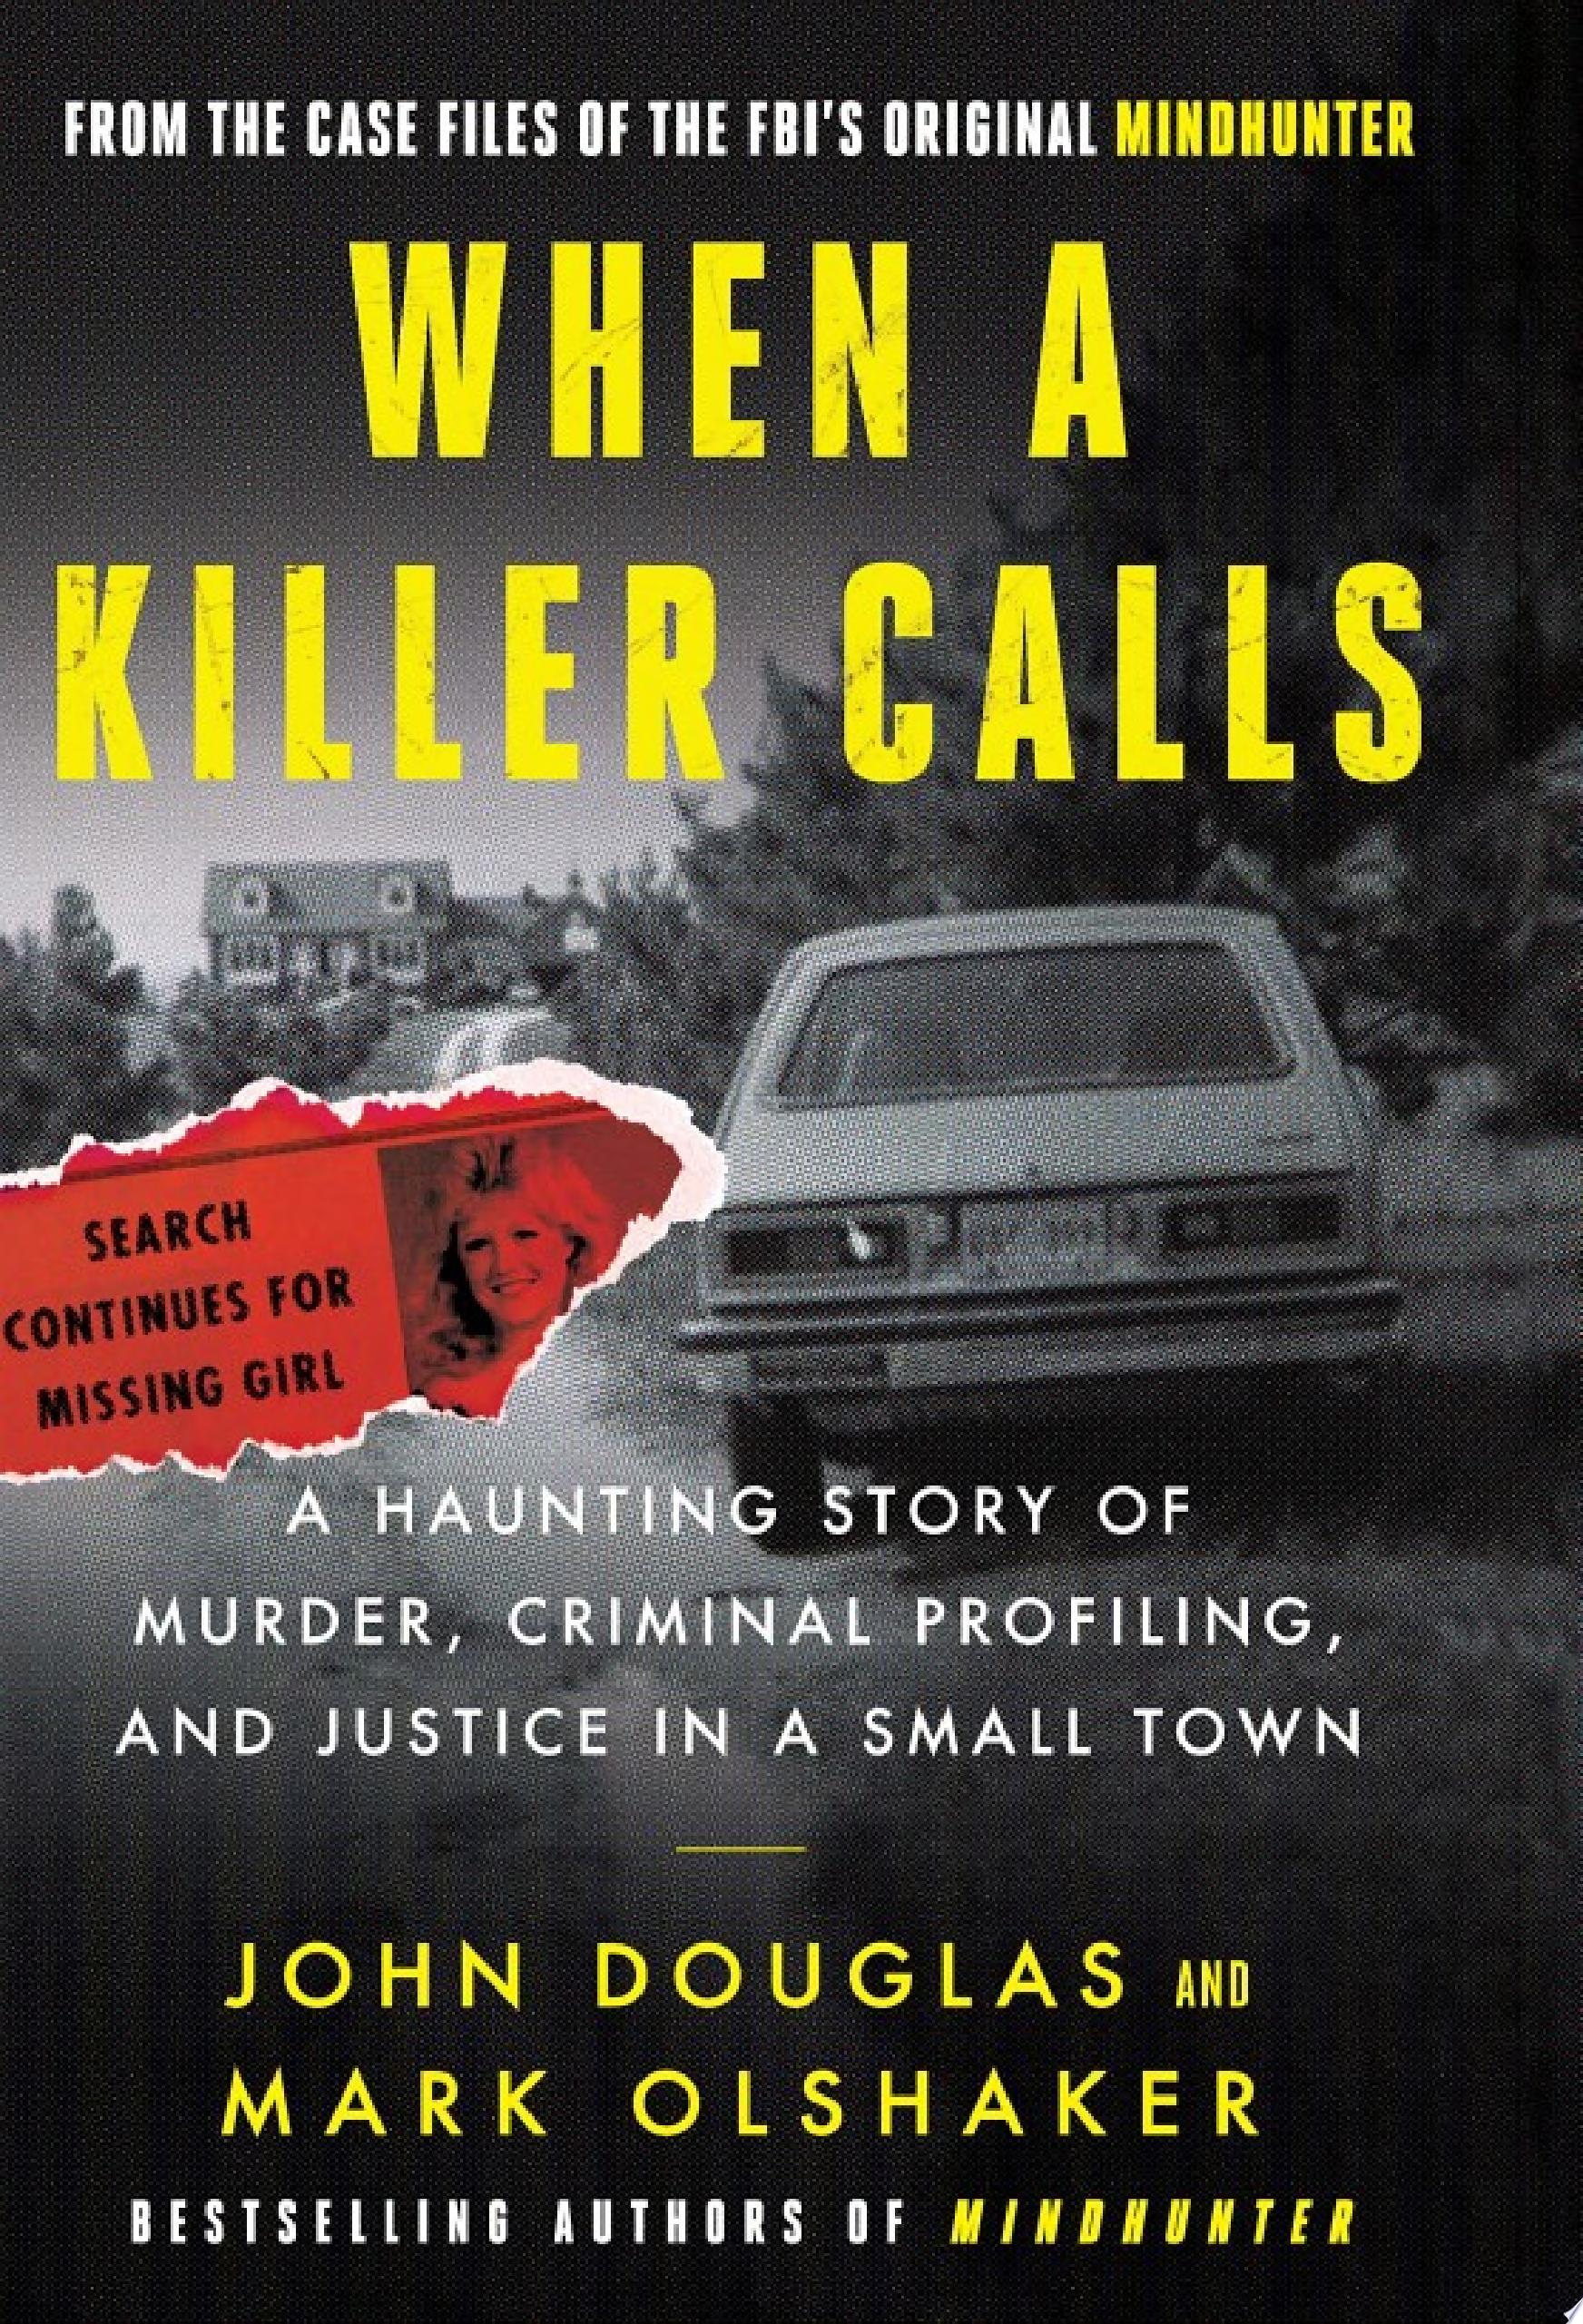 Image for "When a Killer Calls"